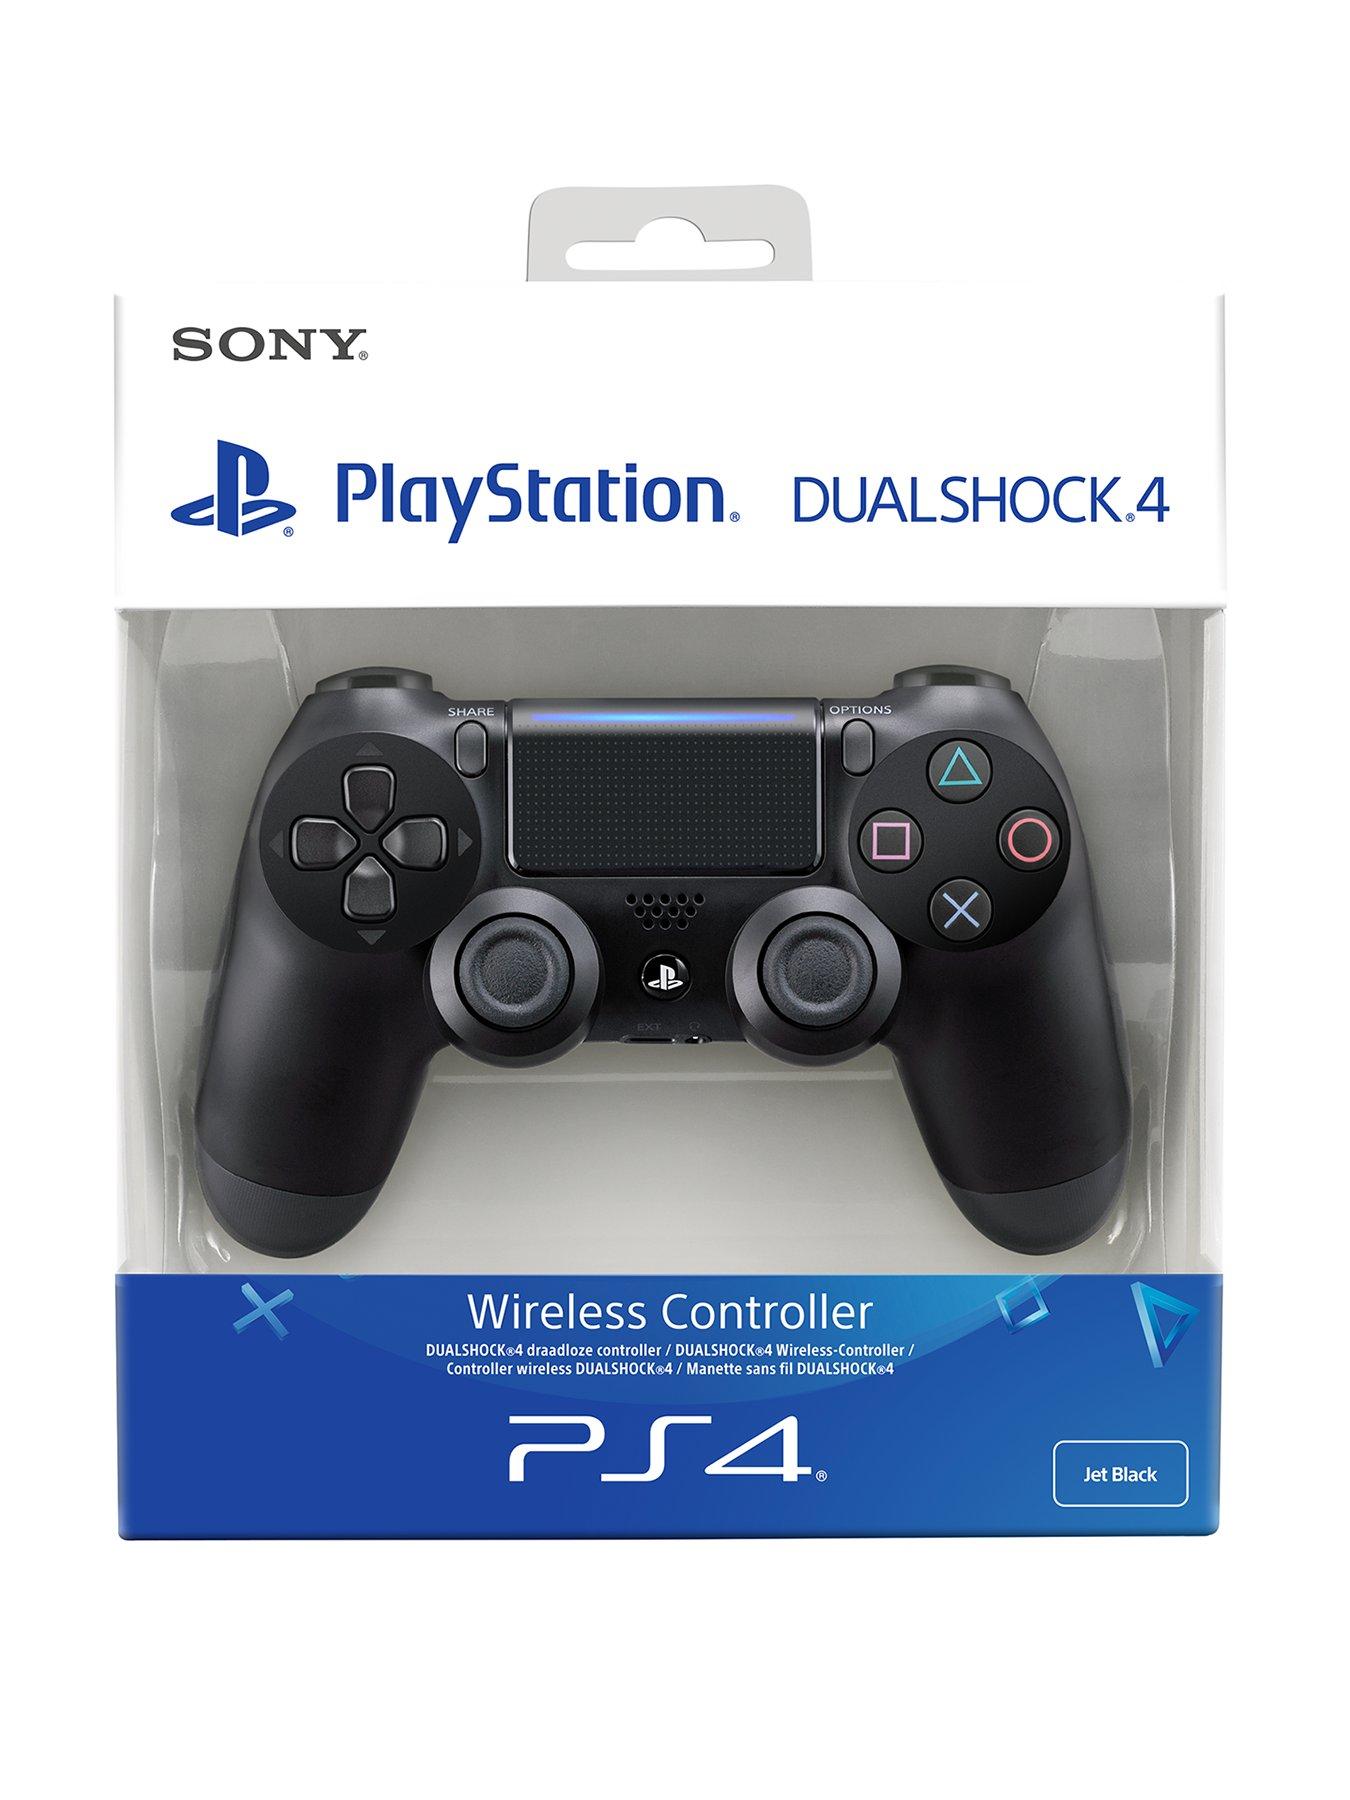 Sony Dualshock 4 Wireless Controller for PlayStation 4 - Fortnite Jet Black  - PlayStation 4